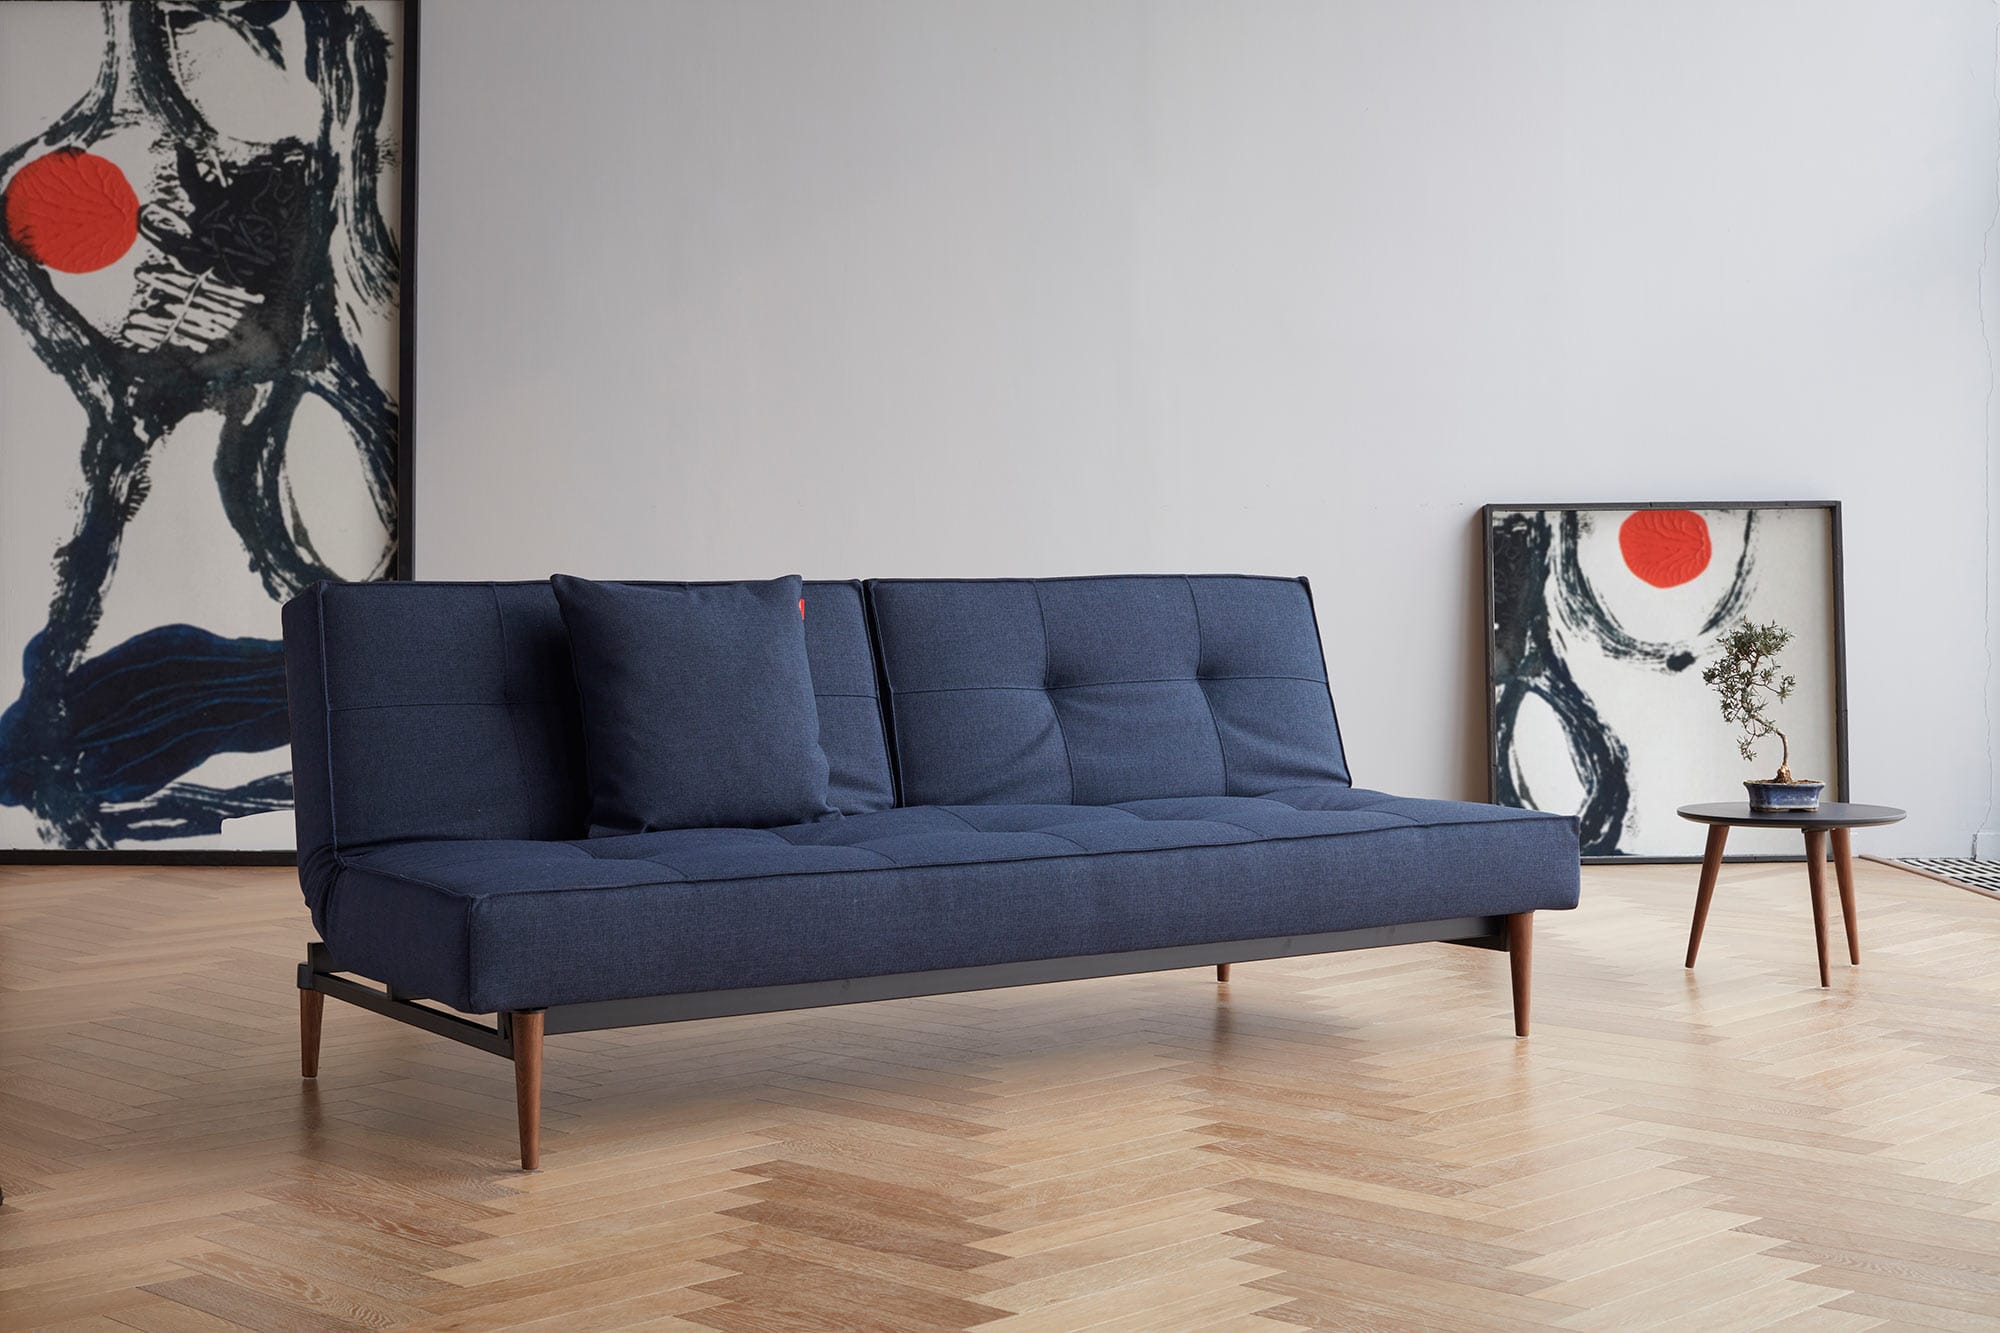 Splitback Sofa Bed w/Black Dance by Eik Blue Innovation Legs Mixed